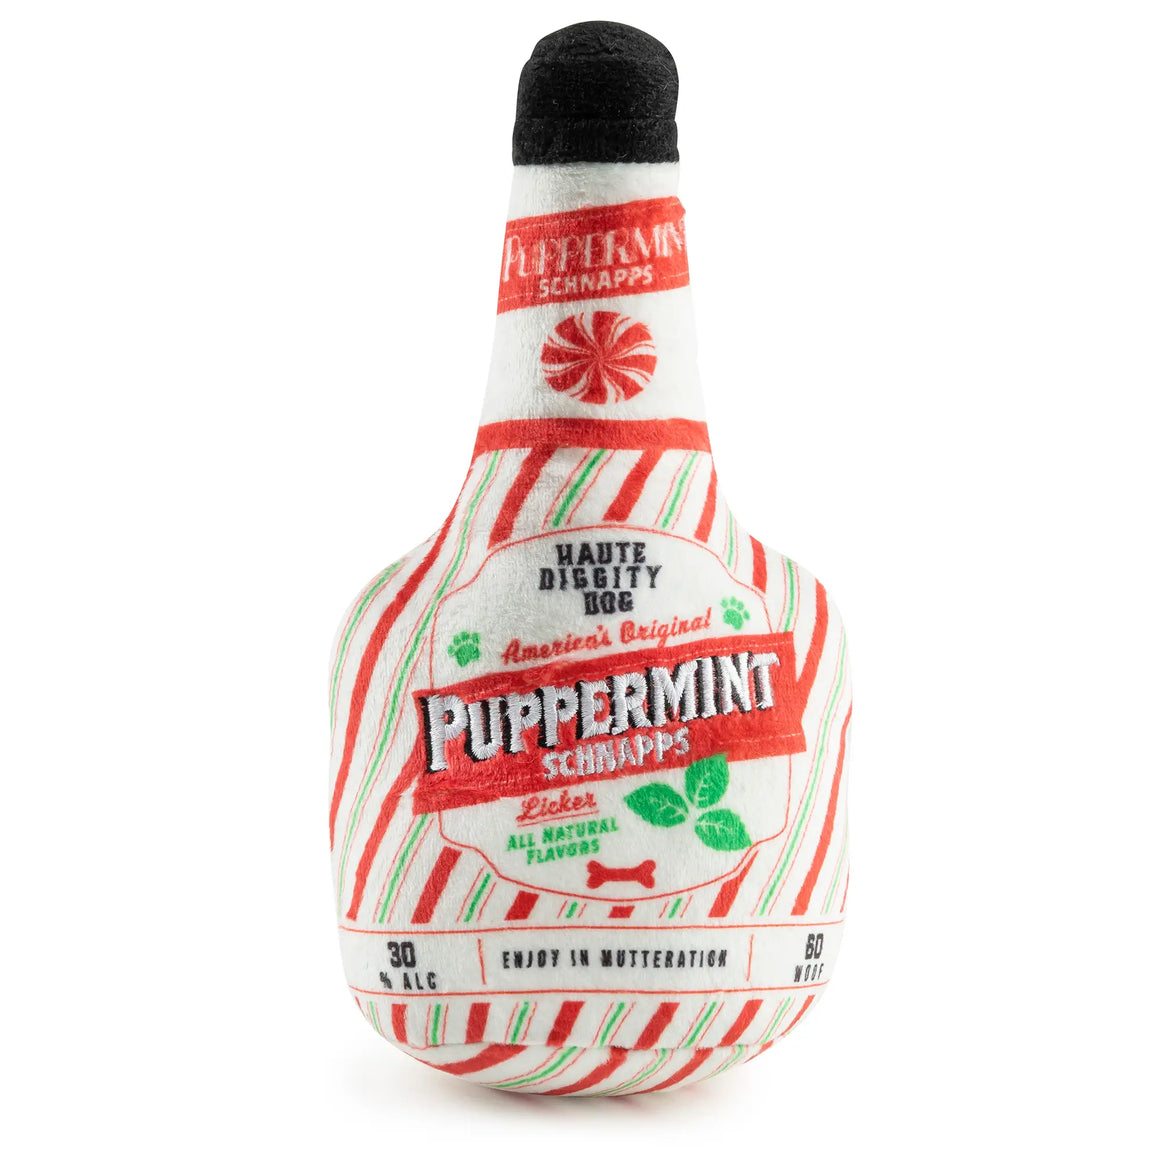 Puppermint Schnapps Bottle Christmas